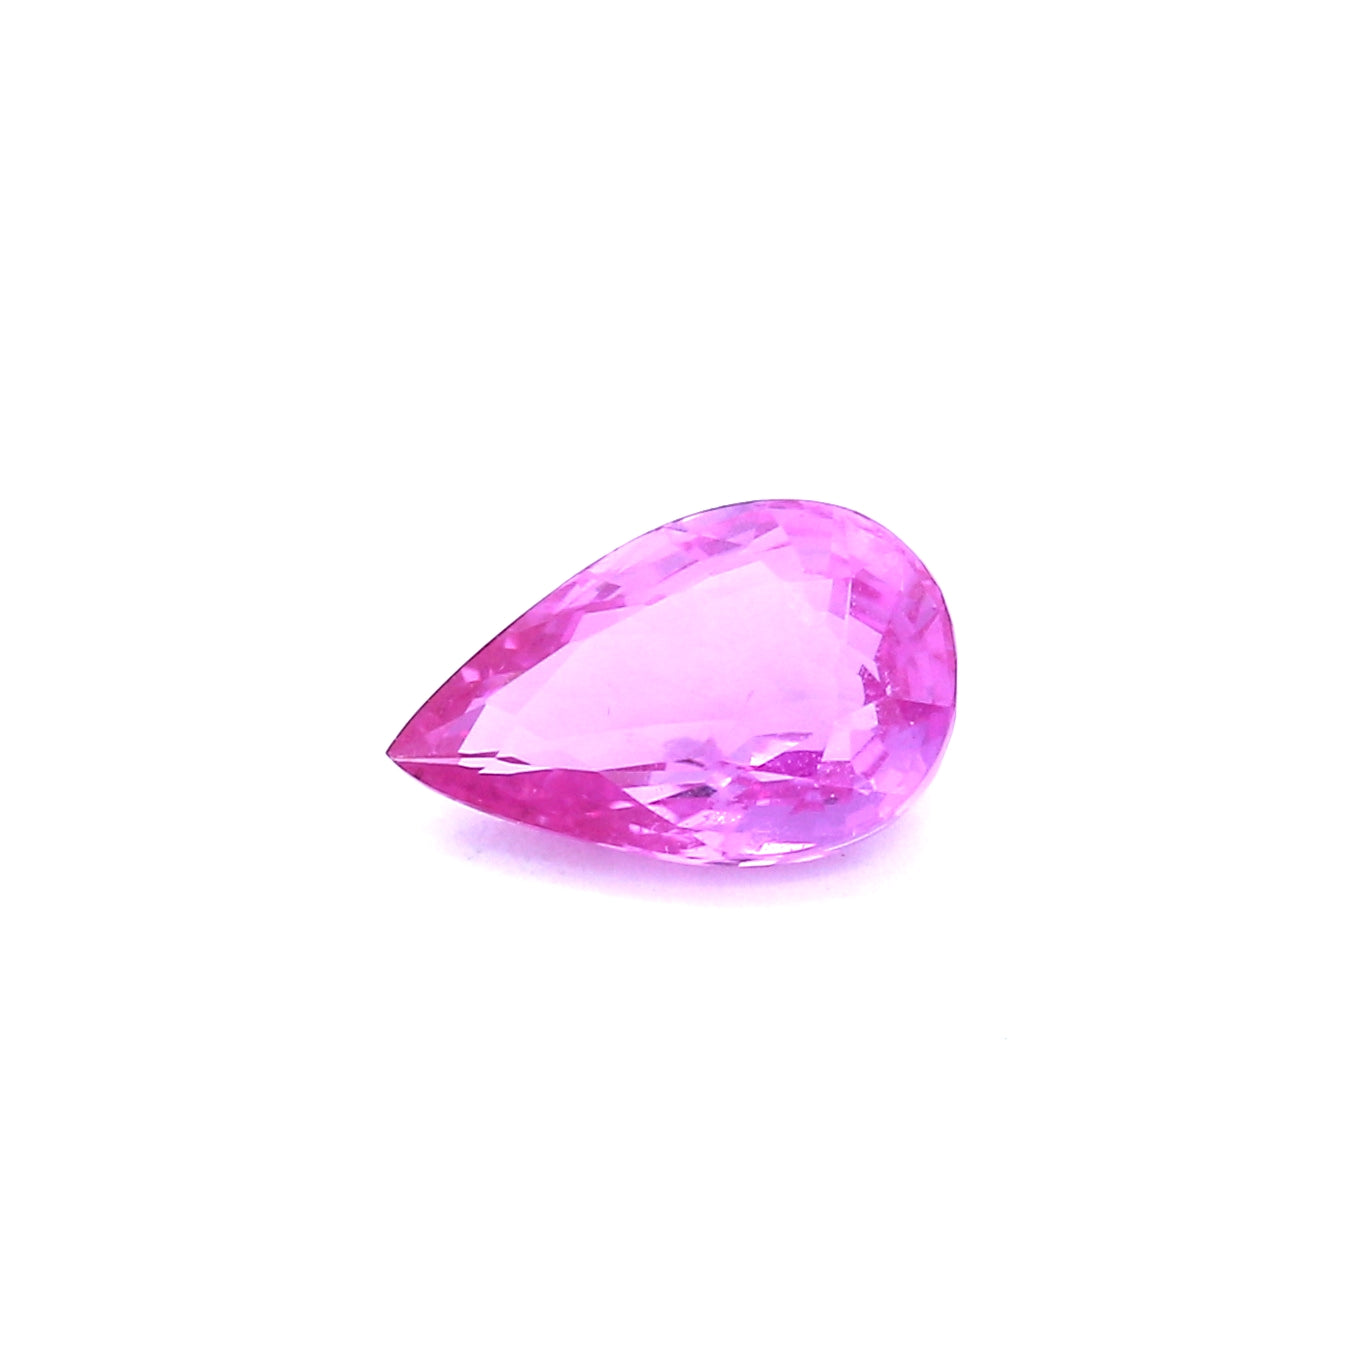 2.03ct Purplish Pink, Pear Shape Sapphire, Heated, Madagascar - 10.17 x 6.45 x 3.81mm